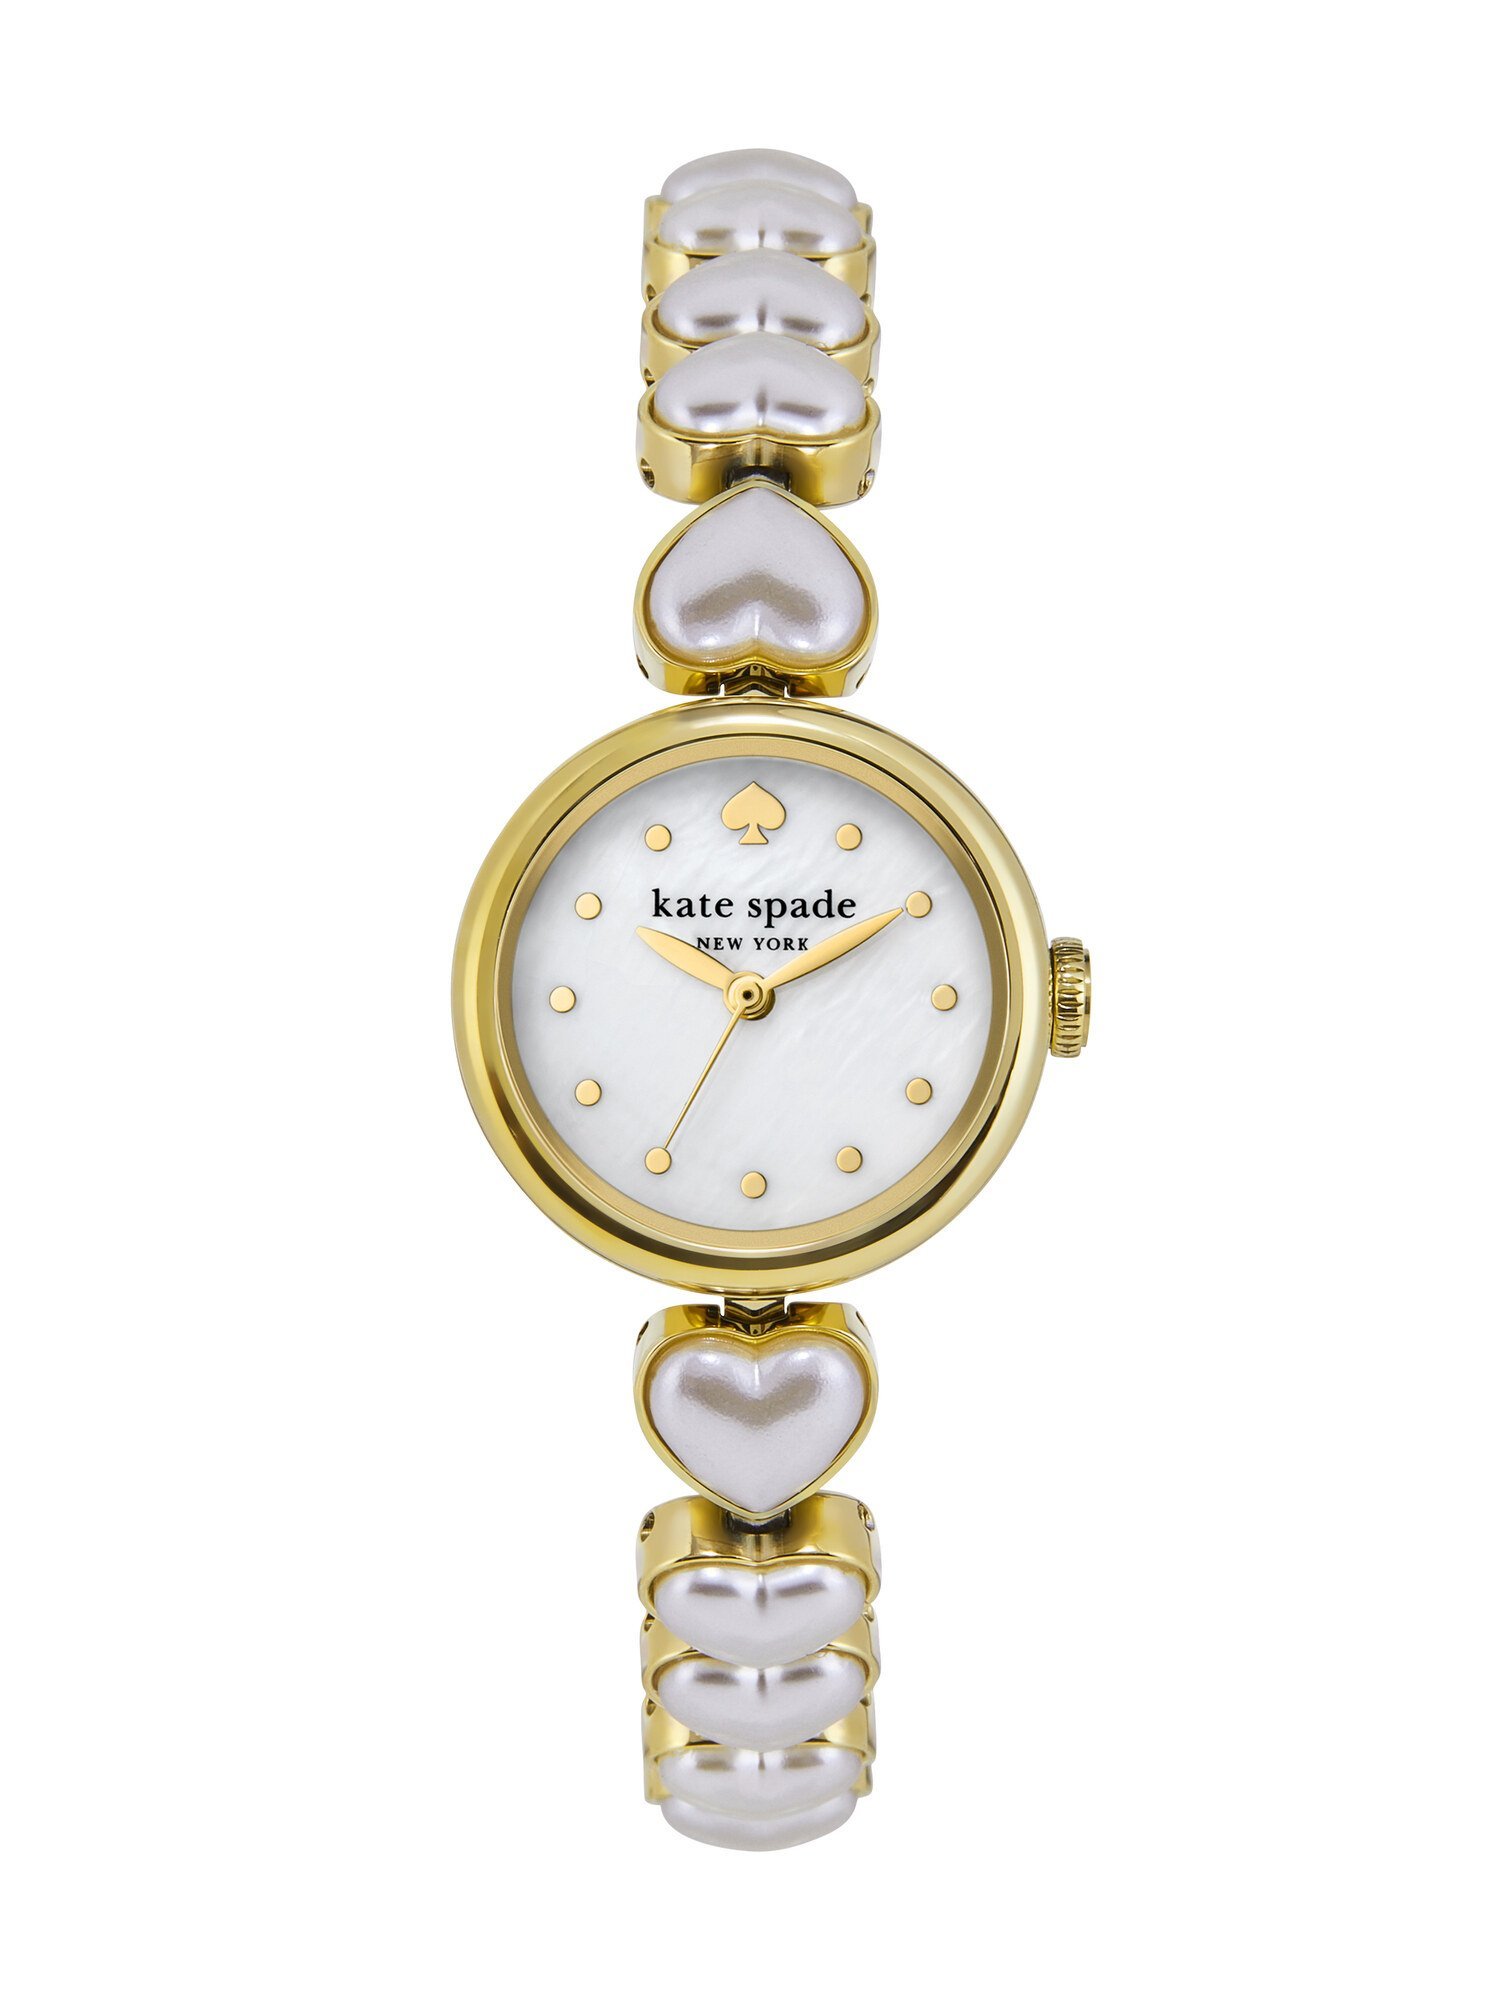 kate spade new york Monroe KSW1815 ウォッチステーションインターナショナル アクセサリー・腕時計 腕時計 ゴールド【送料無料】